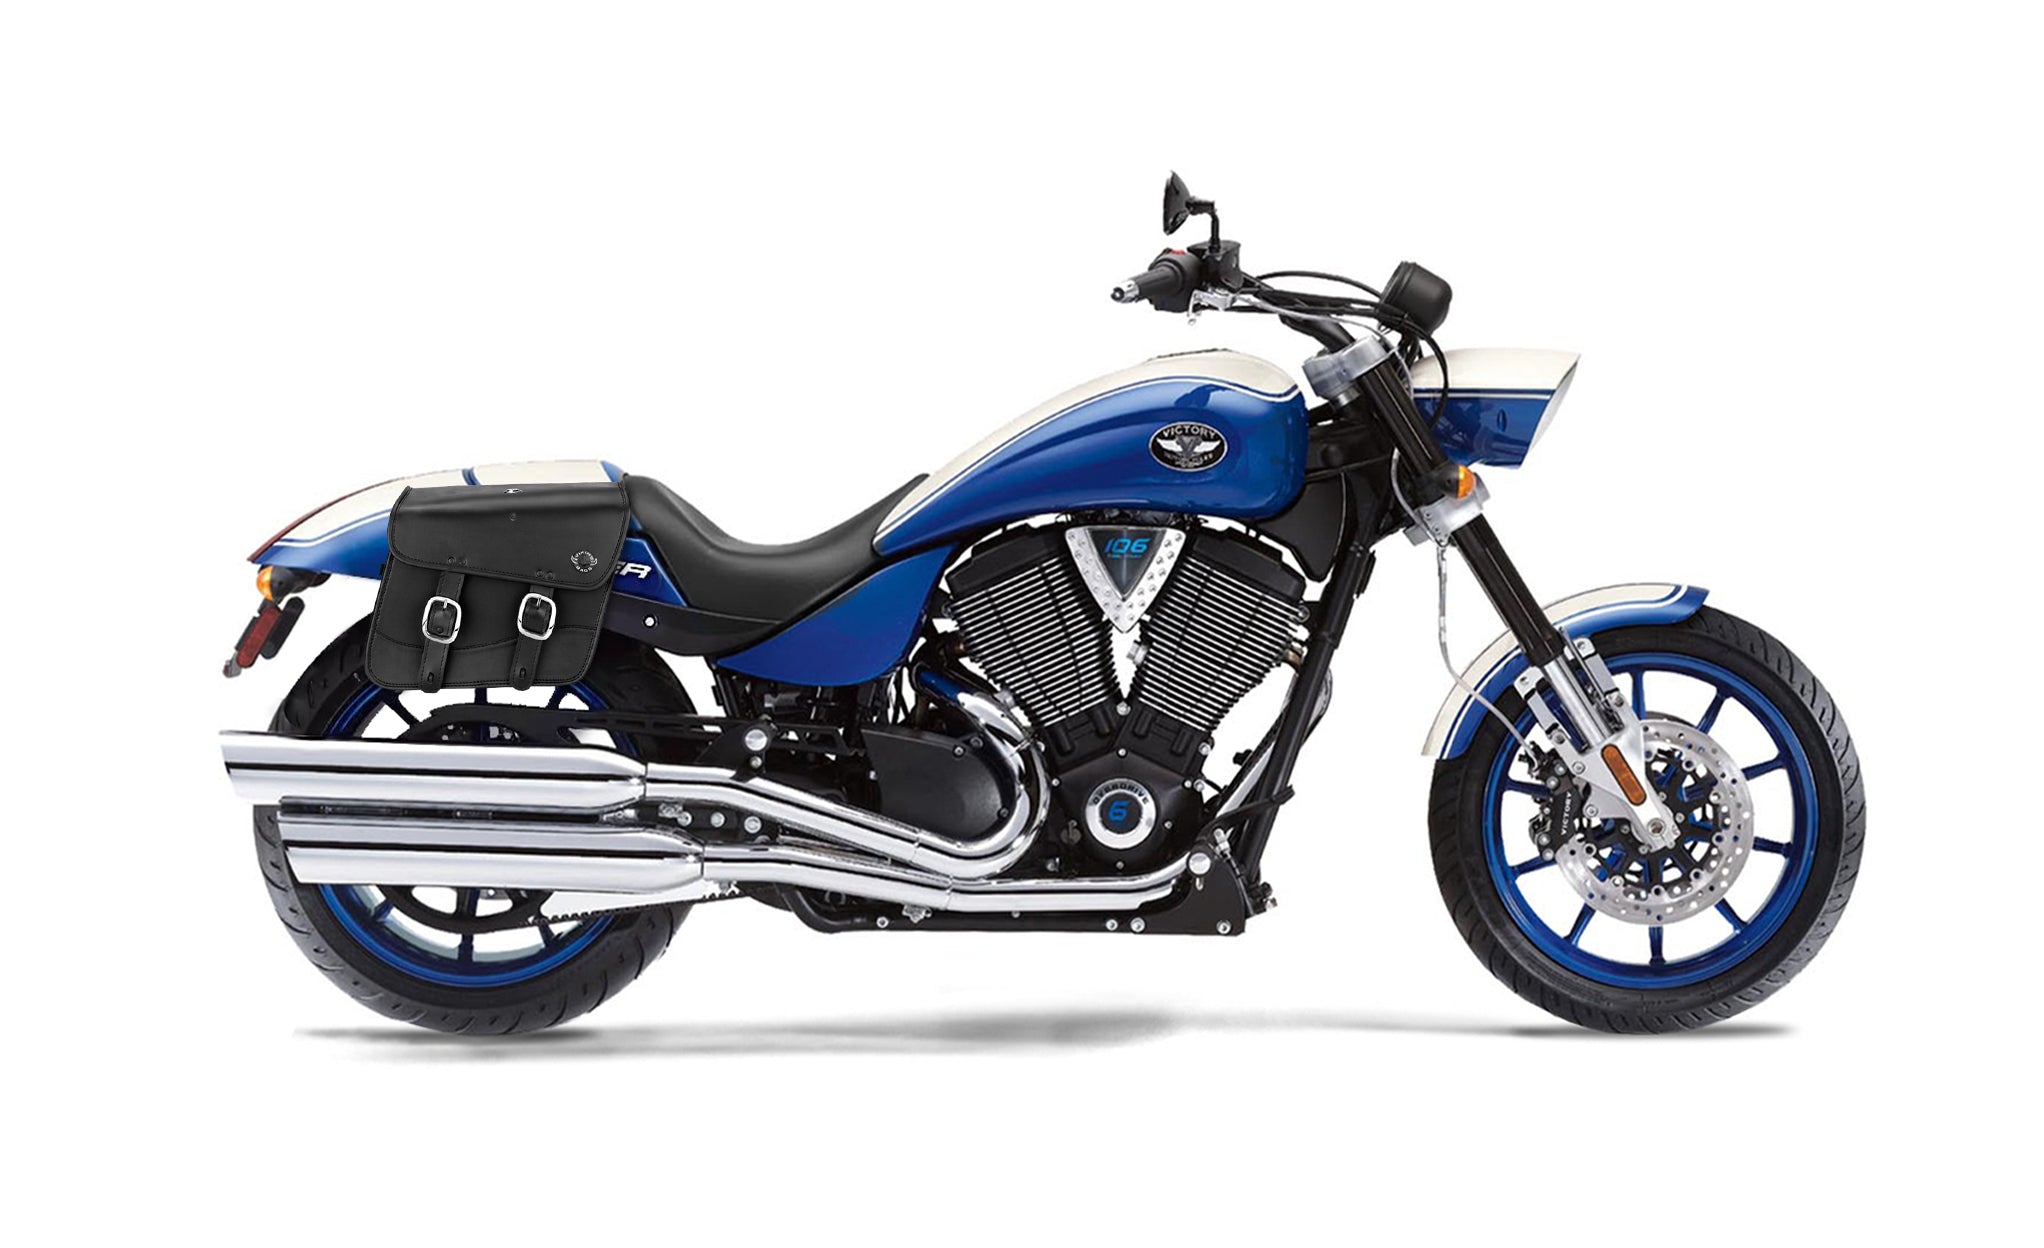 20L - Thor Medium Victory Hammer Leather Motorcycle Saddlebags on Bike Photo @expand